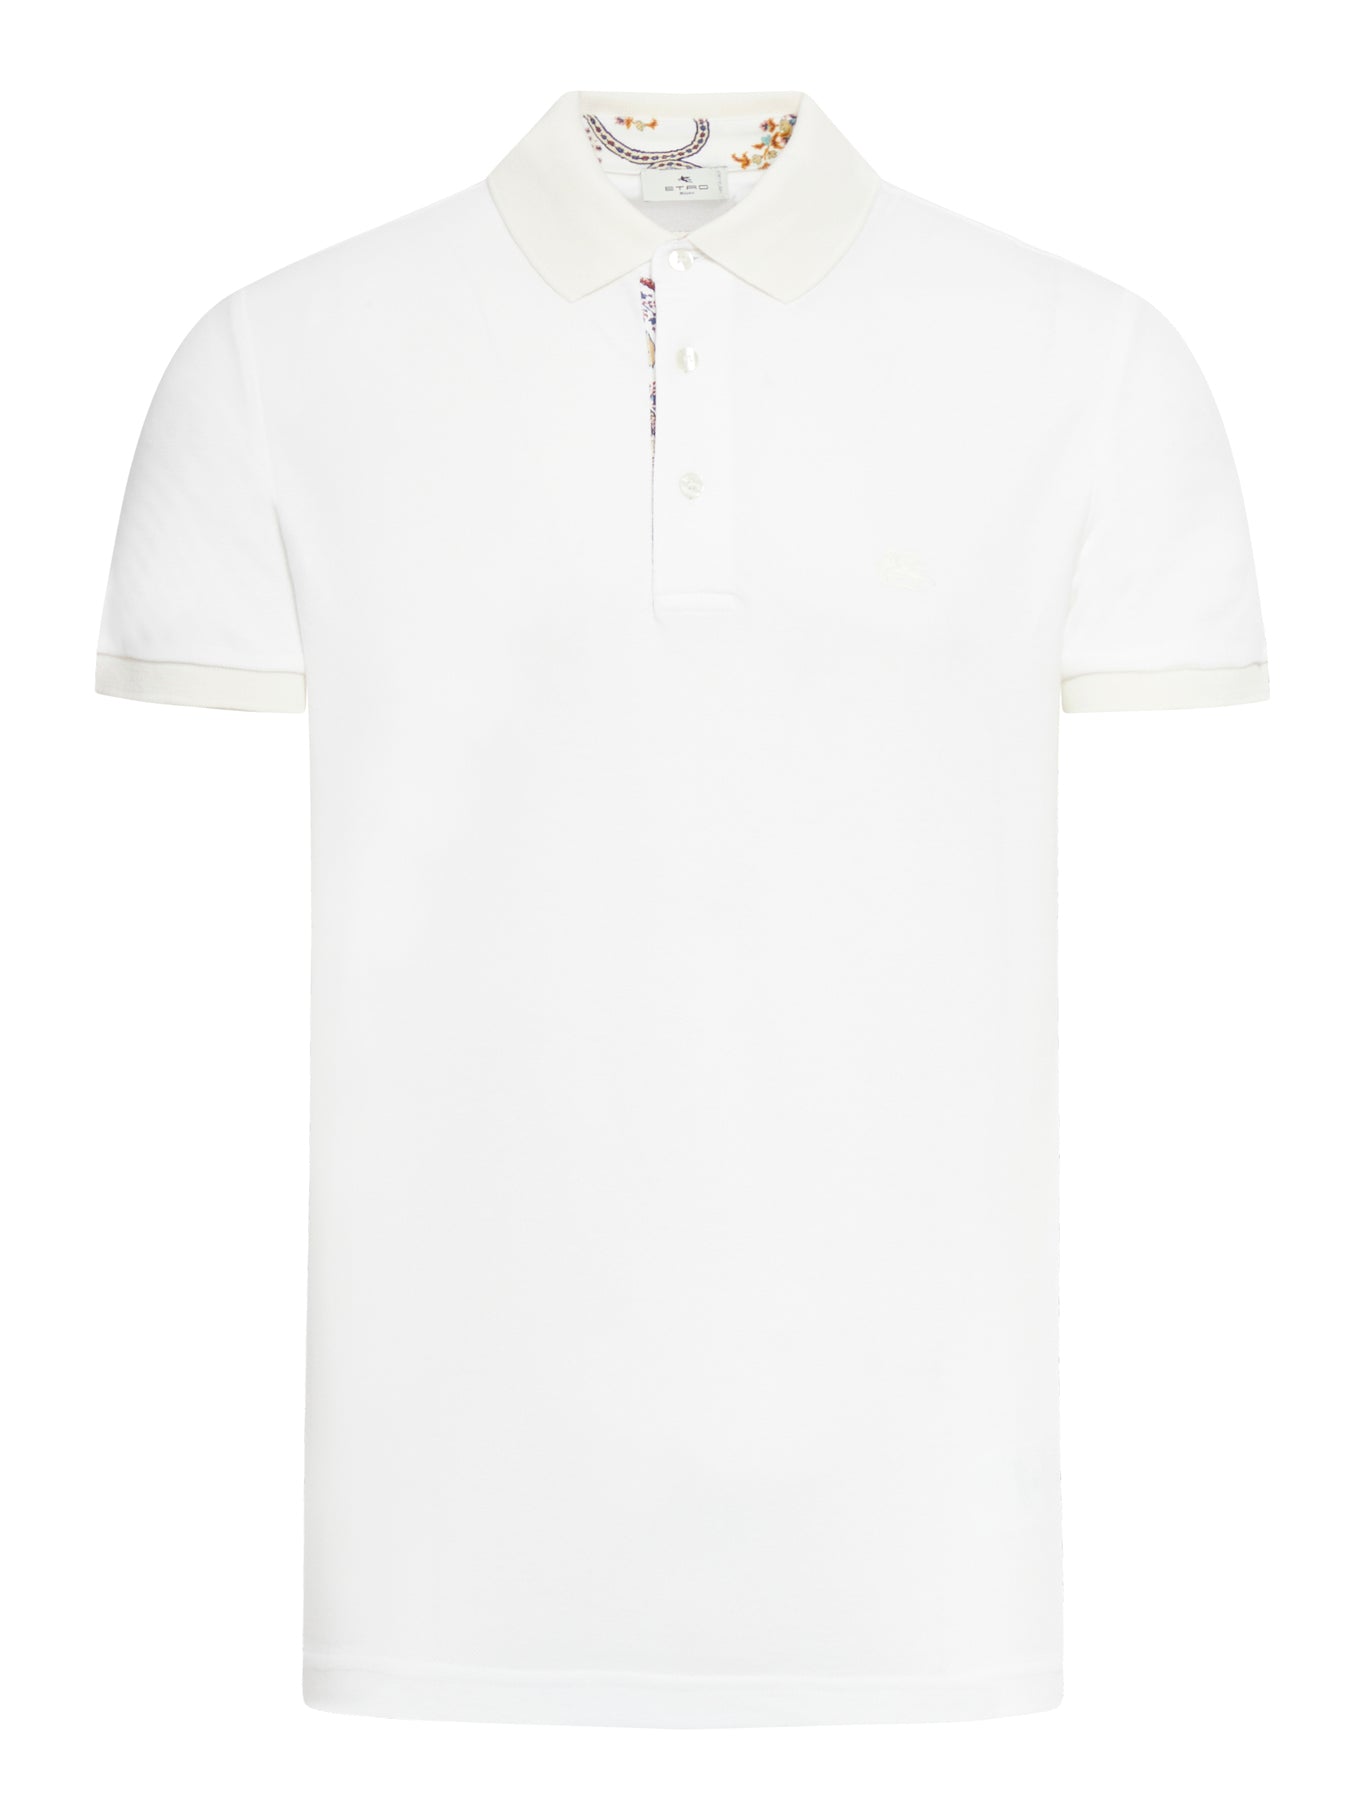 Pegaso-embroidered cotton polo shirt